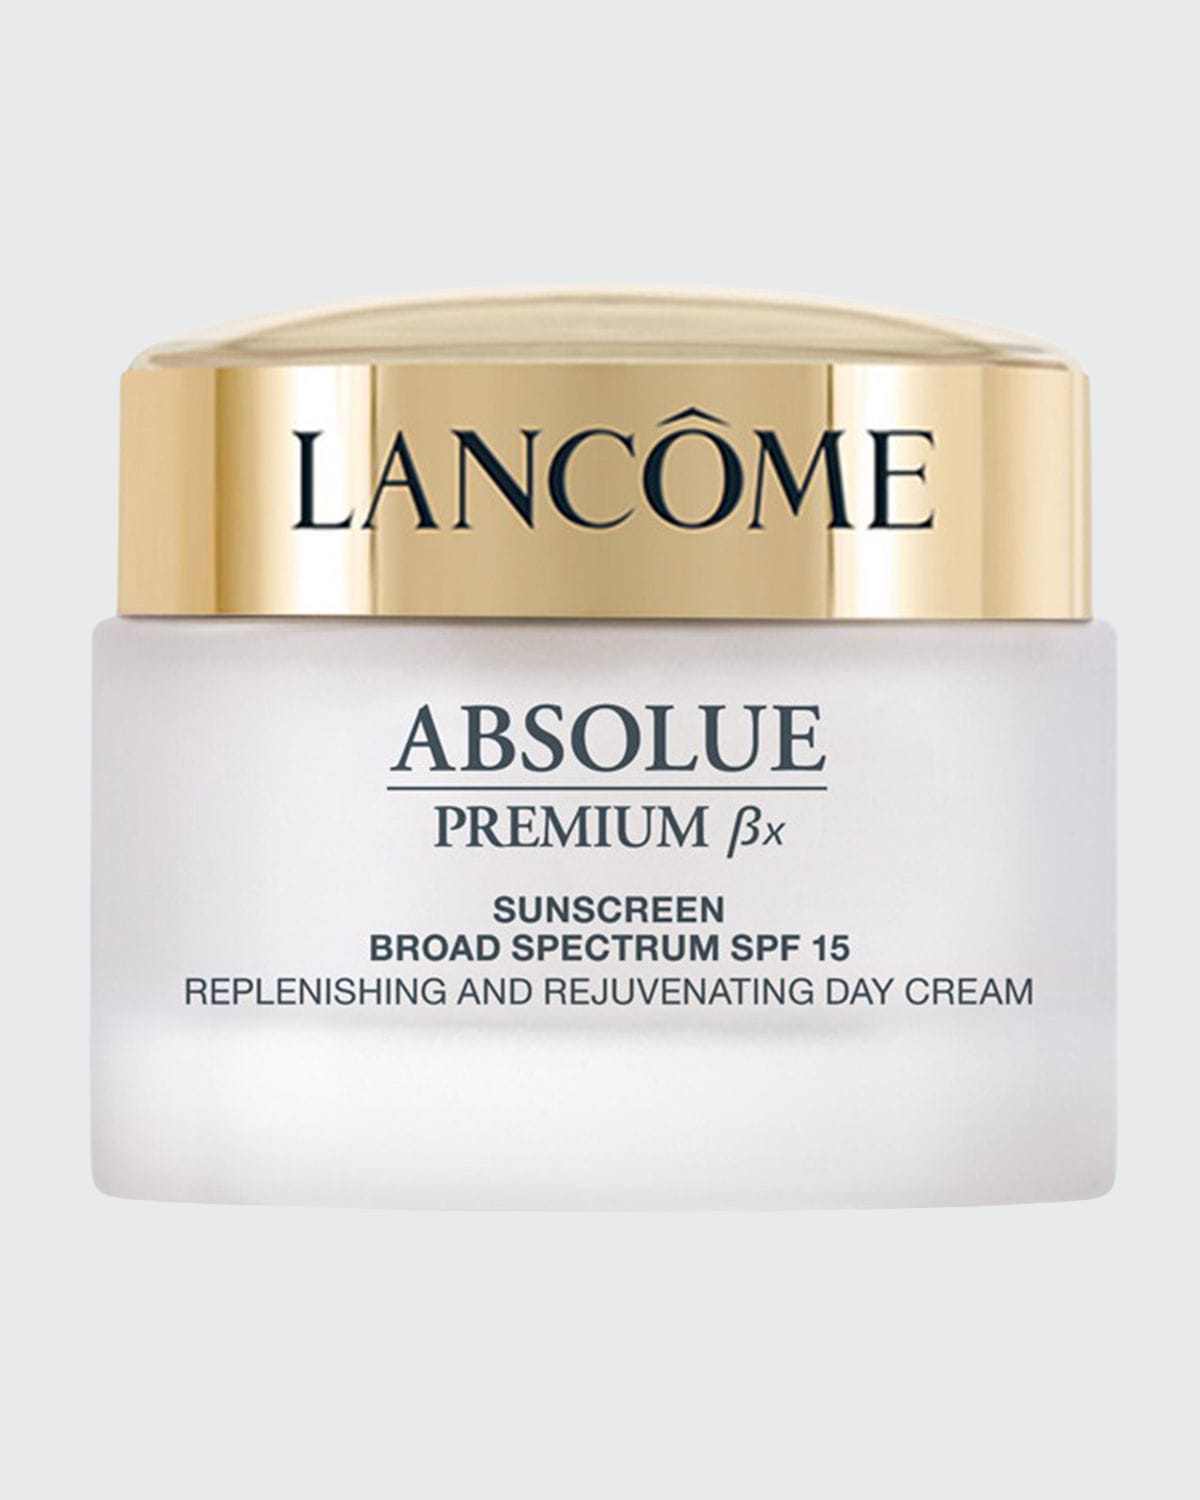 Absolue Premium Bx Replenishing and Rejuvenating Day Cream SPF 15, 2.6 oz.